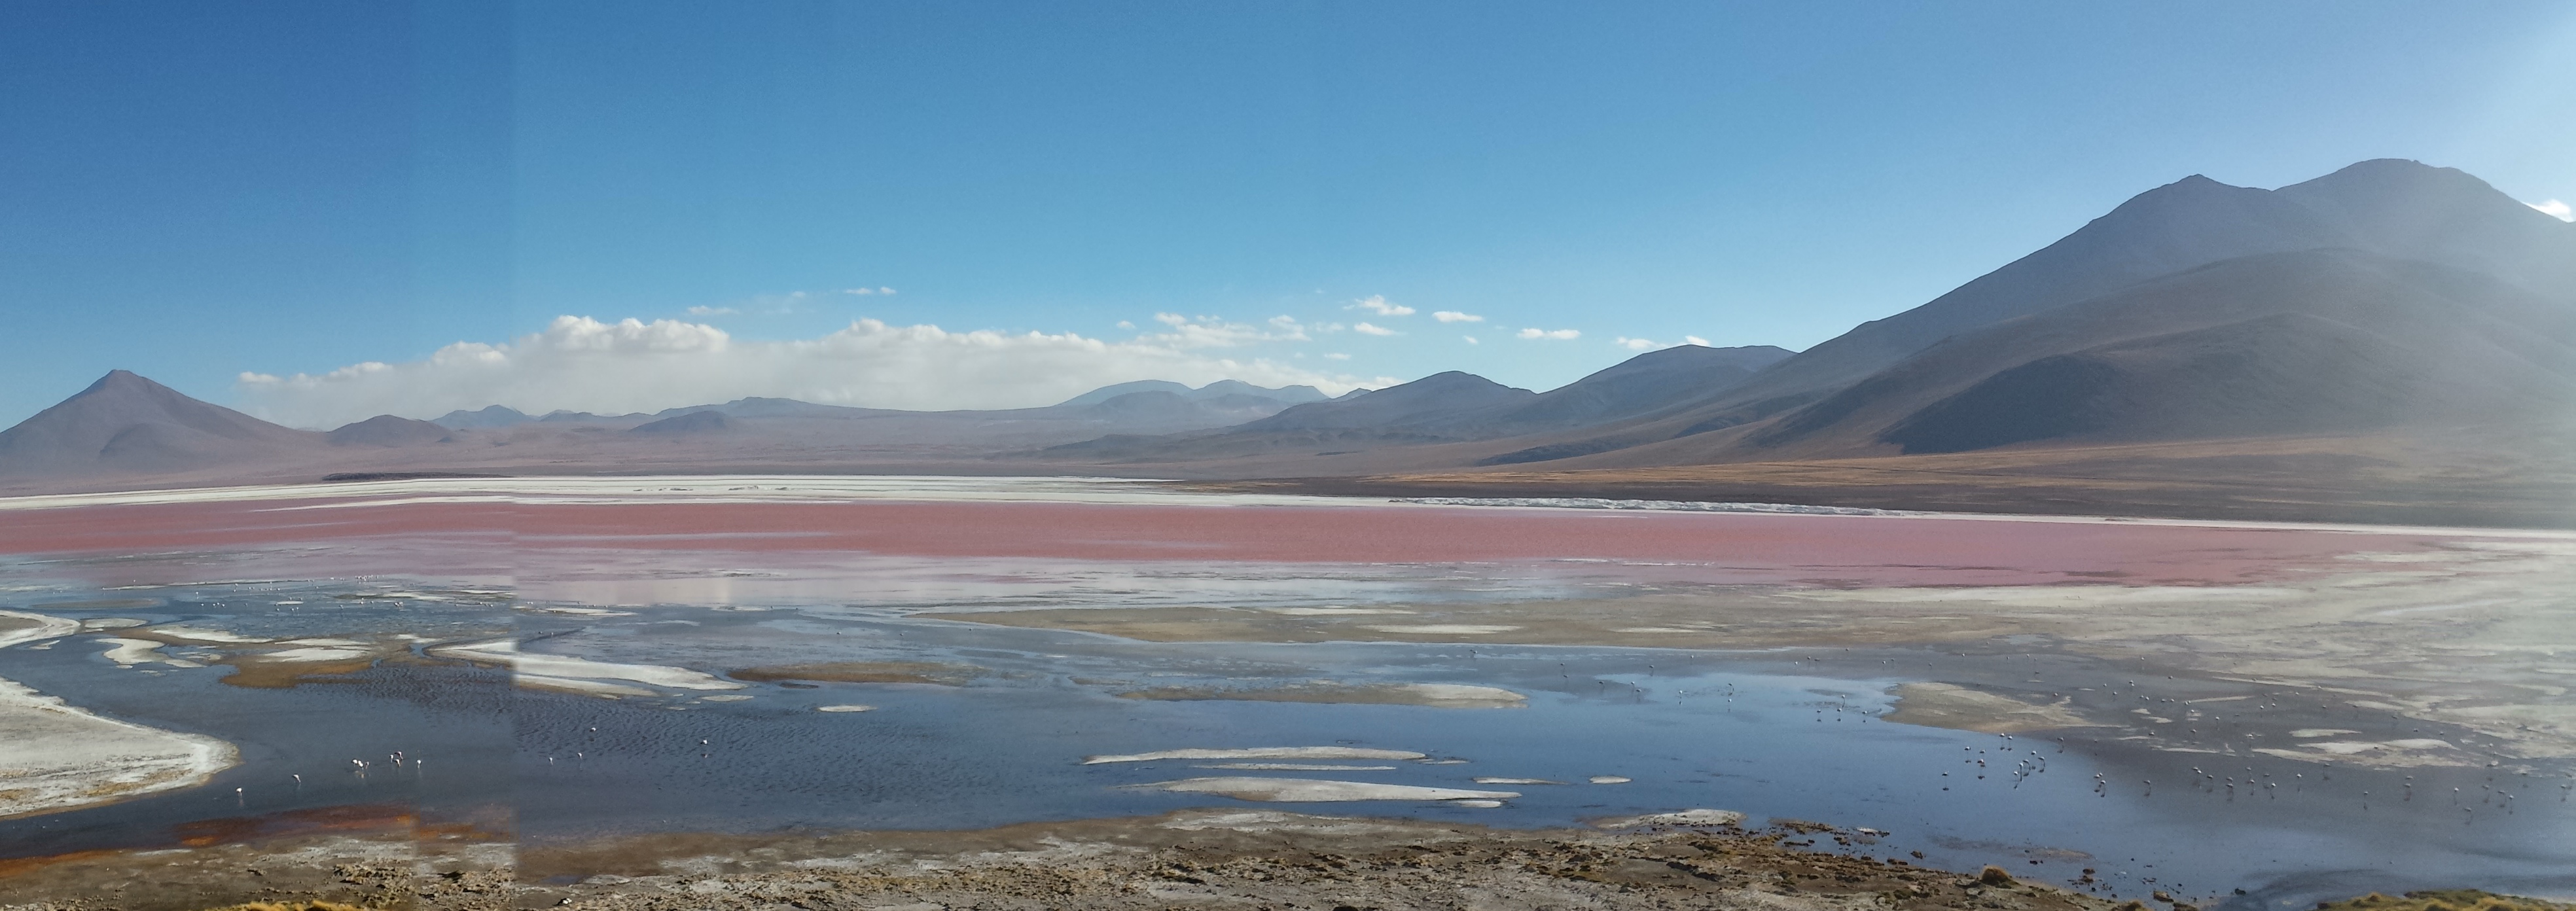 Colored lake in bolivia photo